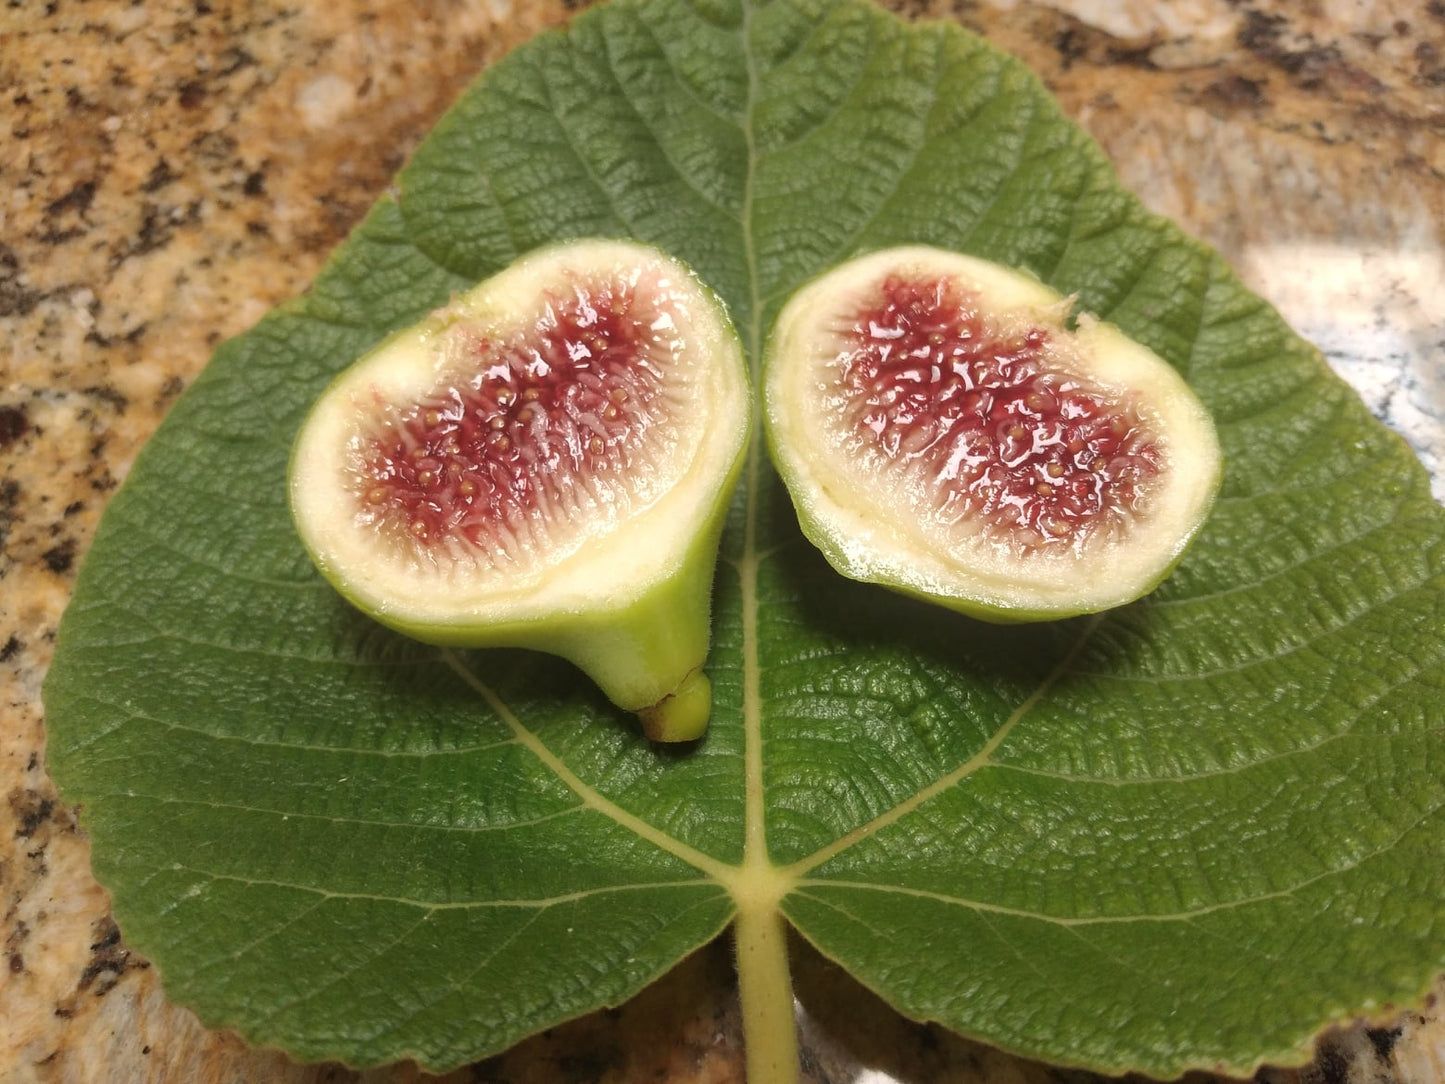 Ficus Palmata N1 Fig Tree - White Punjab Fig - 2 Cuttings - Tasty Unique Berry Flavor